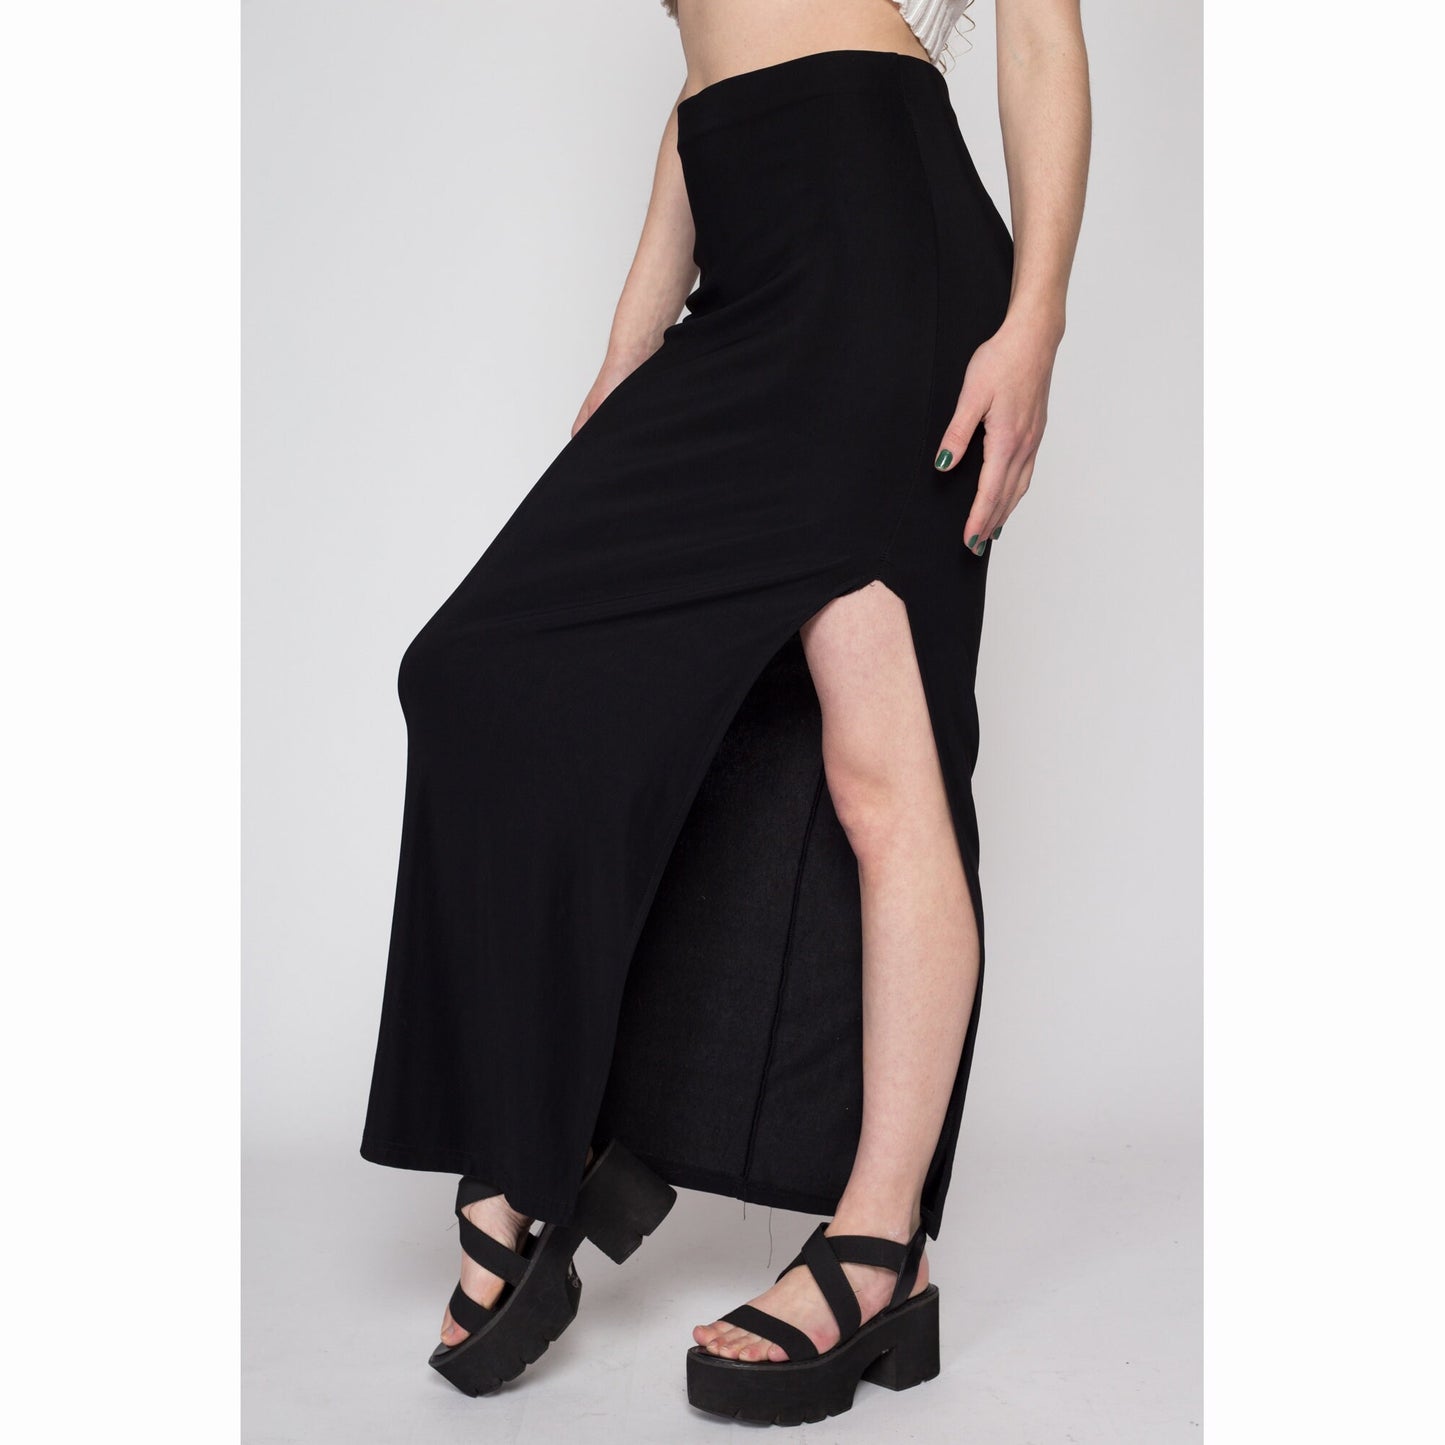 Medium 90s Slinky Black High Slit Maxi Skirt | Vintage Minimalist Fitted High Waisted Skirt